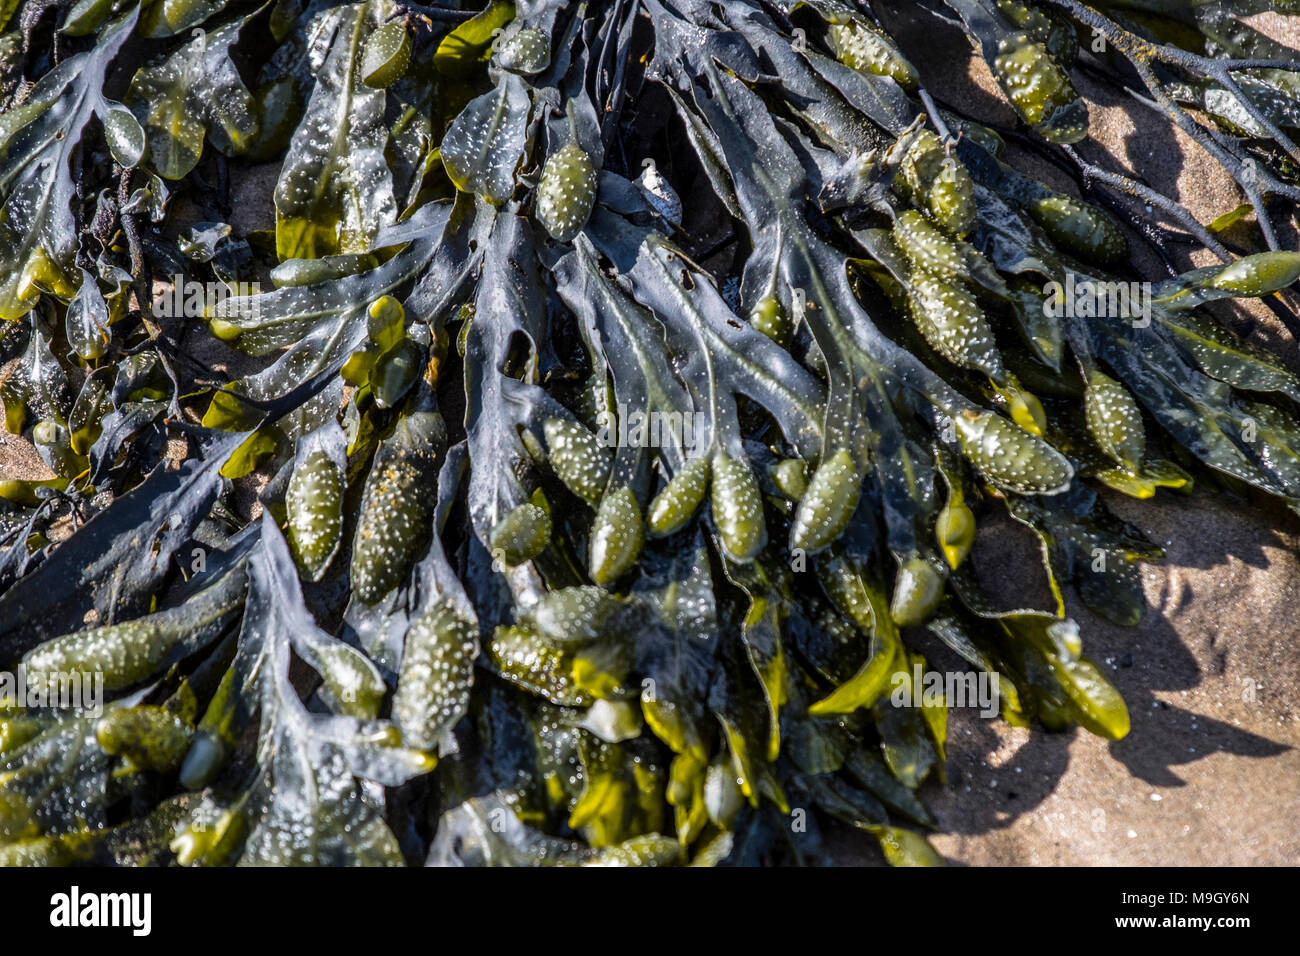 seaweed and rock pools on Scottish Beach Stock Photo